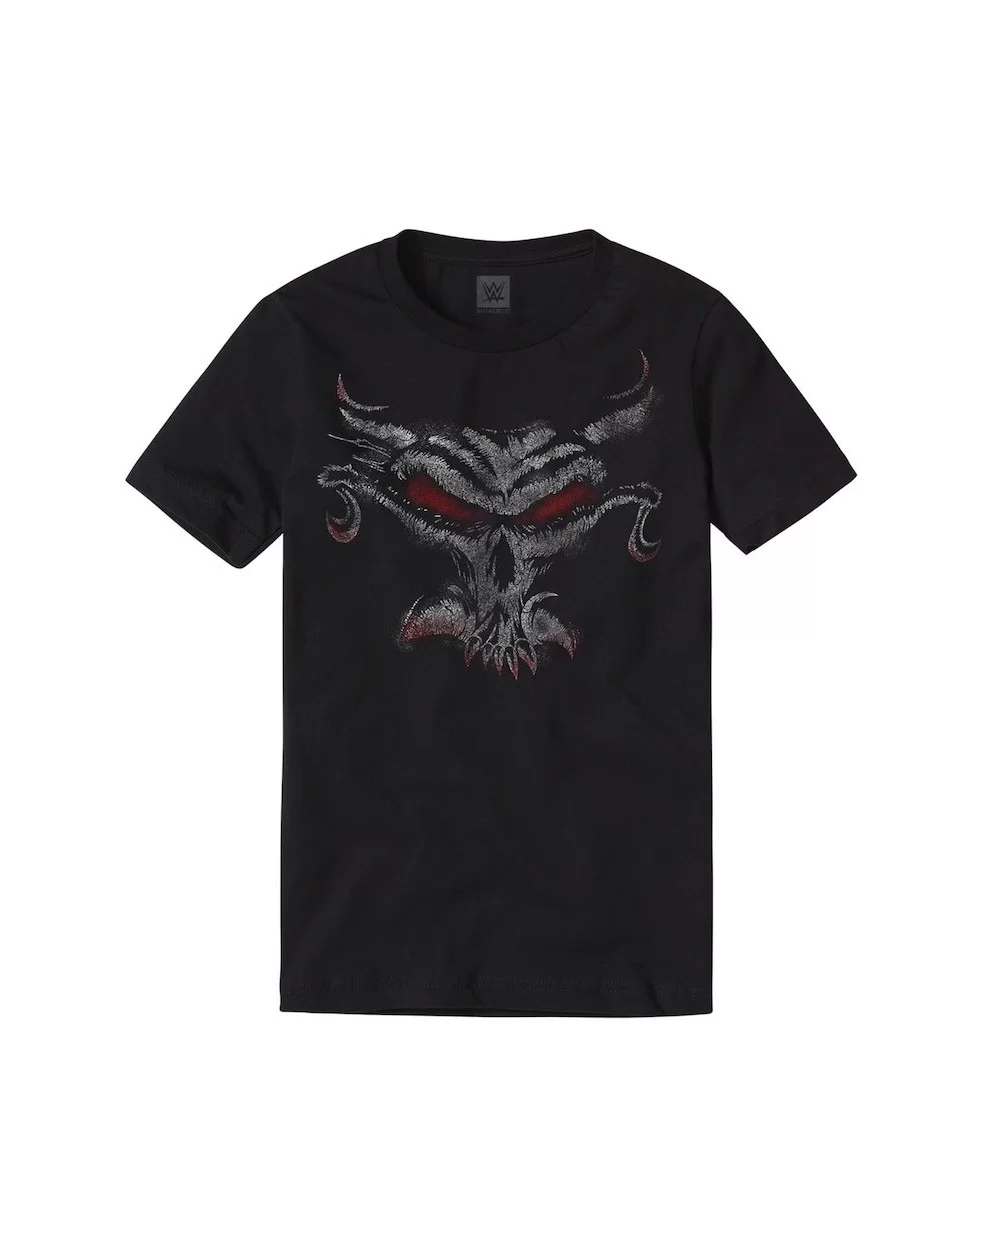 Men's Black Brock Lesnar The Beast Skull T-Shirt $7.68 T-Shirts